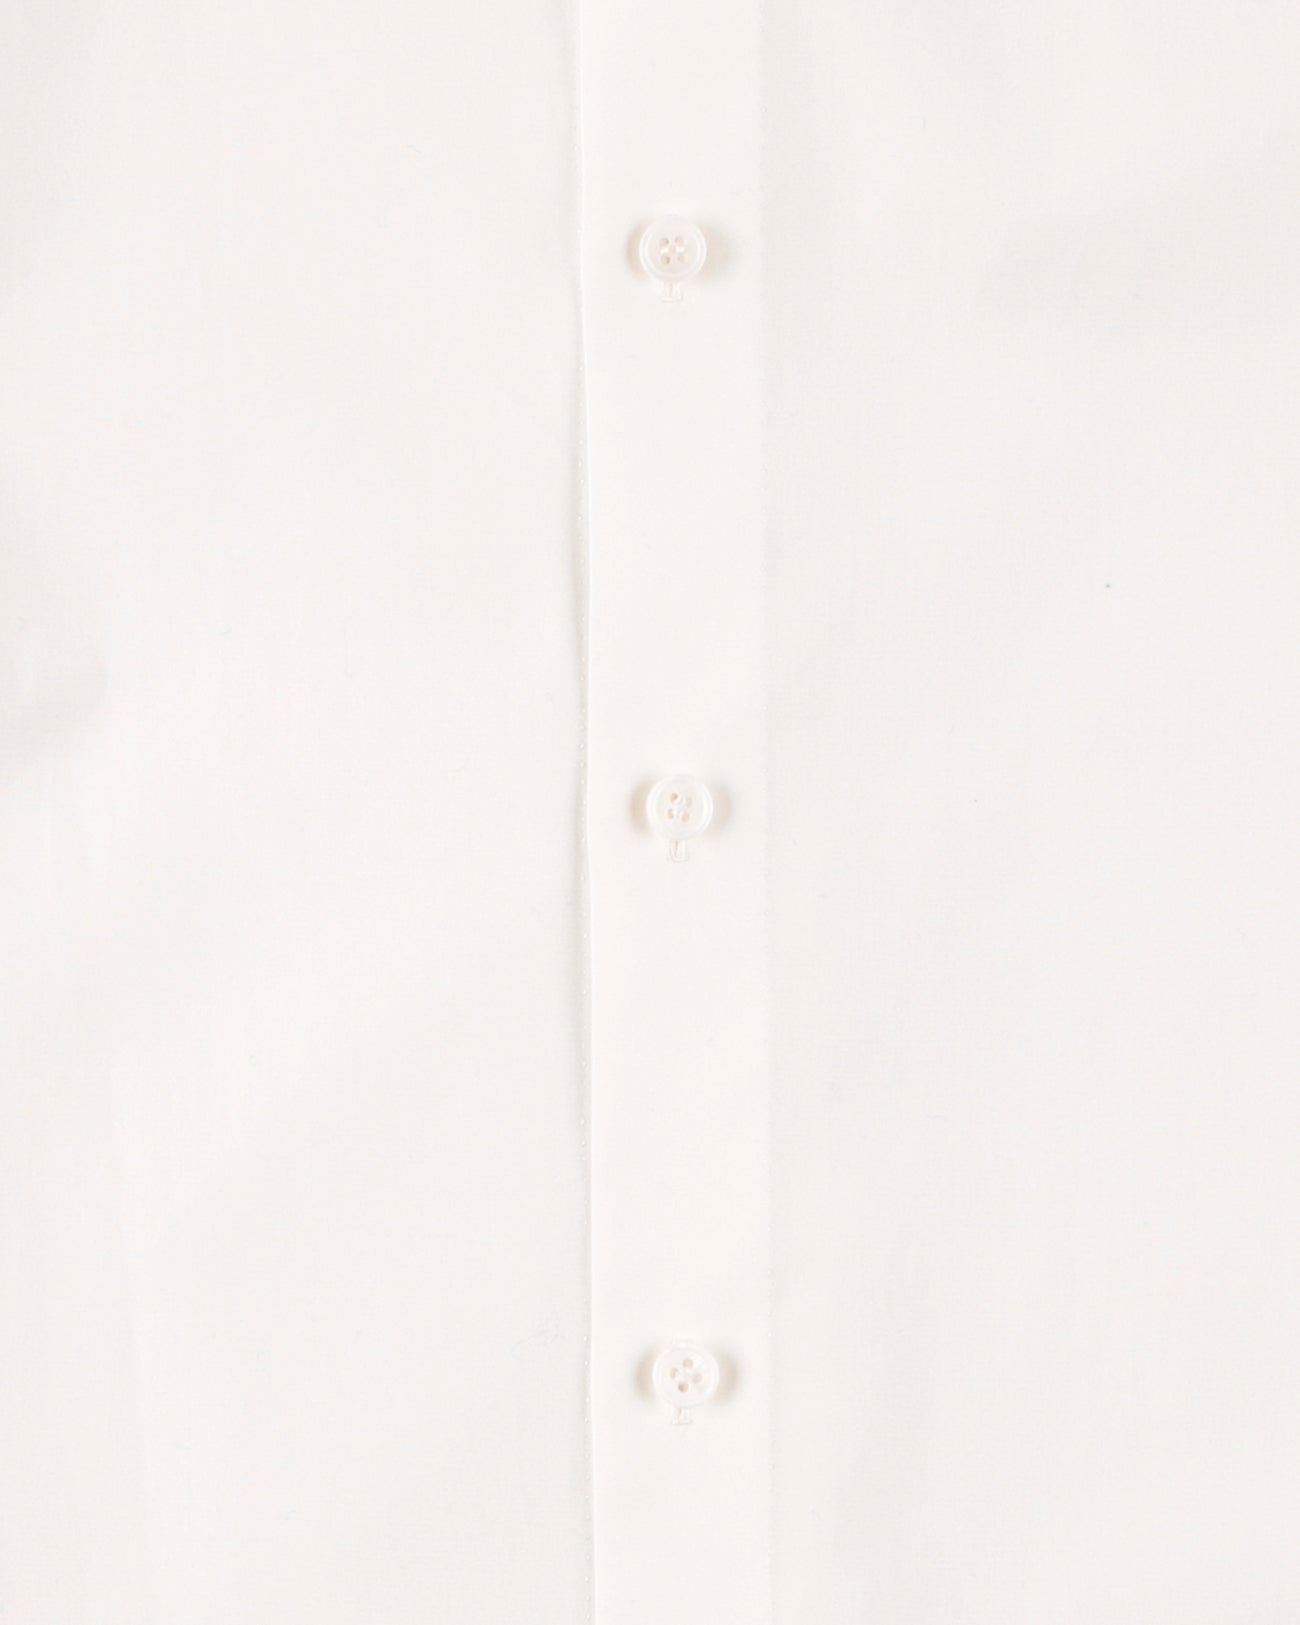 Classic couture shirt - white